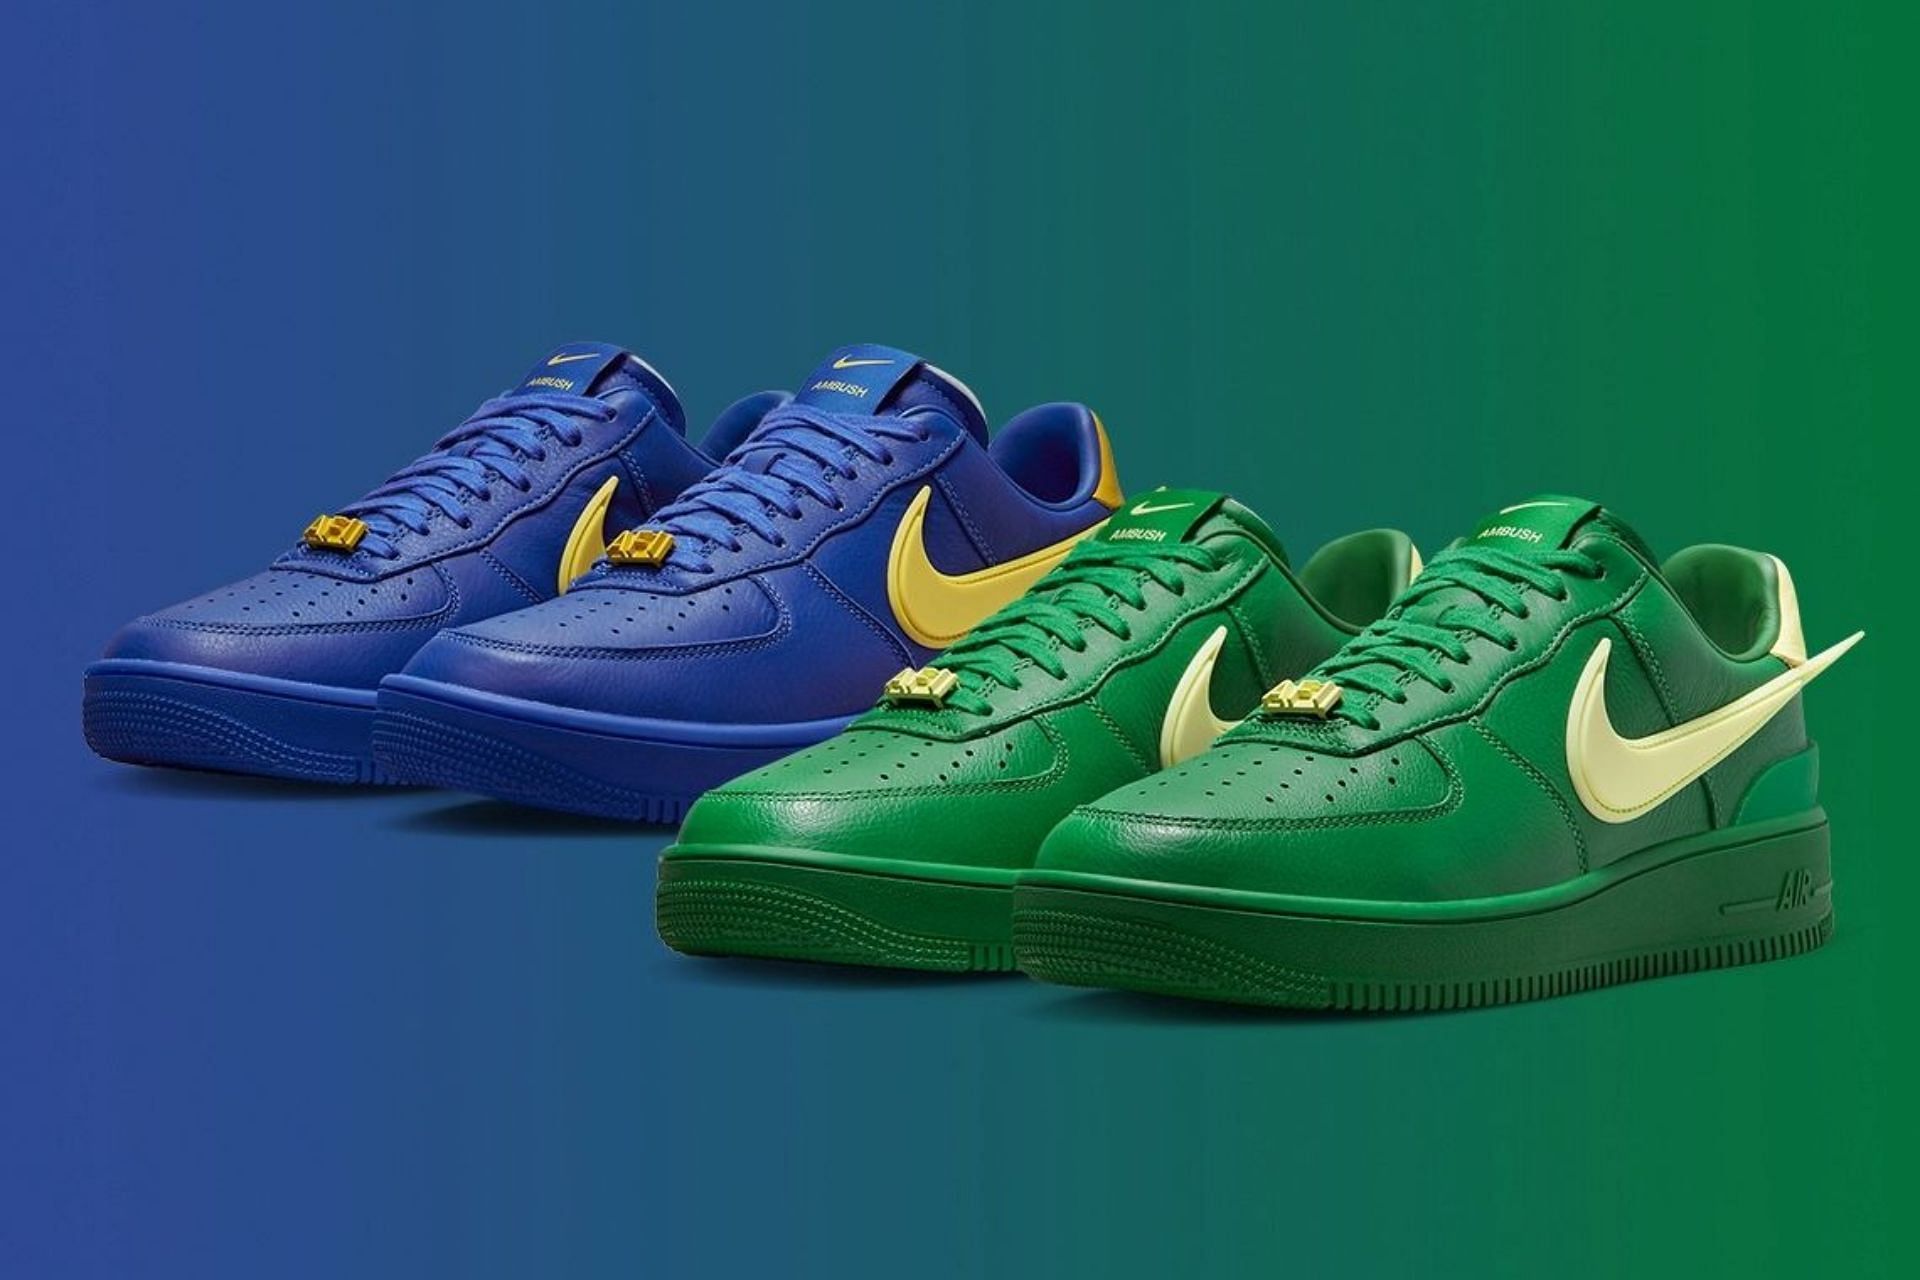 AMBUSH x Nike Air Force 1 sneaker collection (Image via Nike)